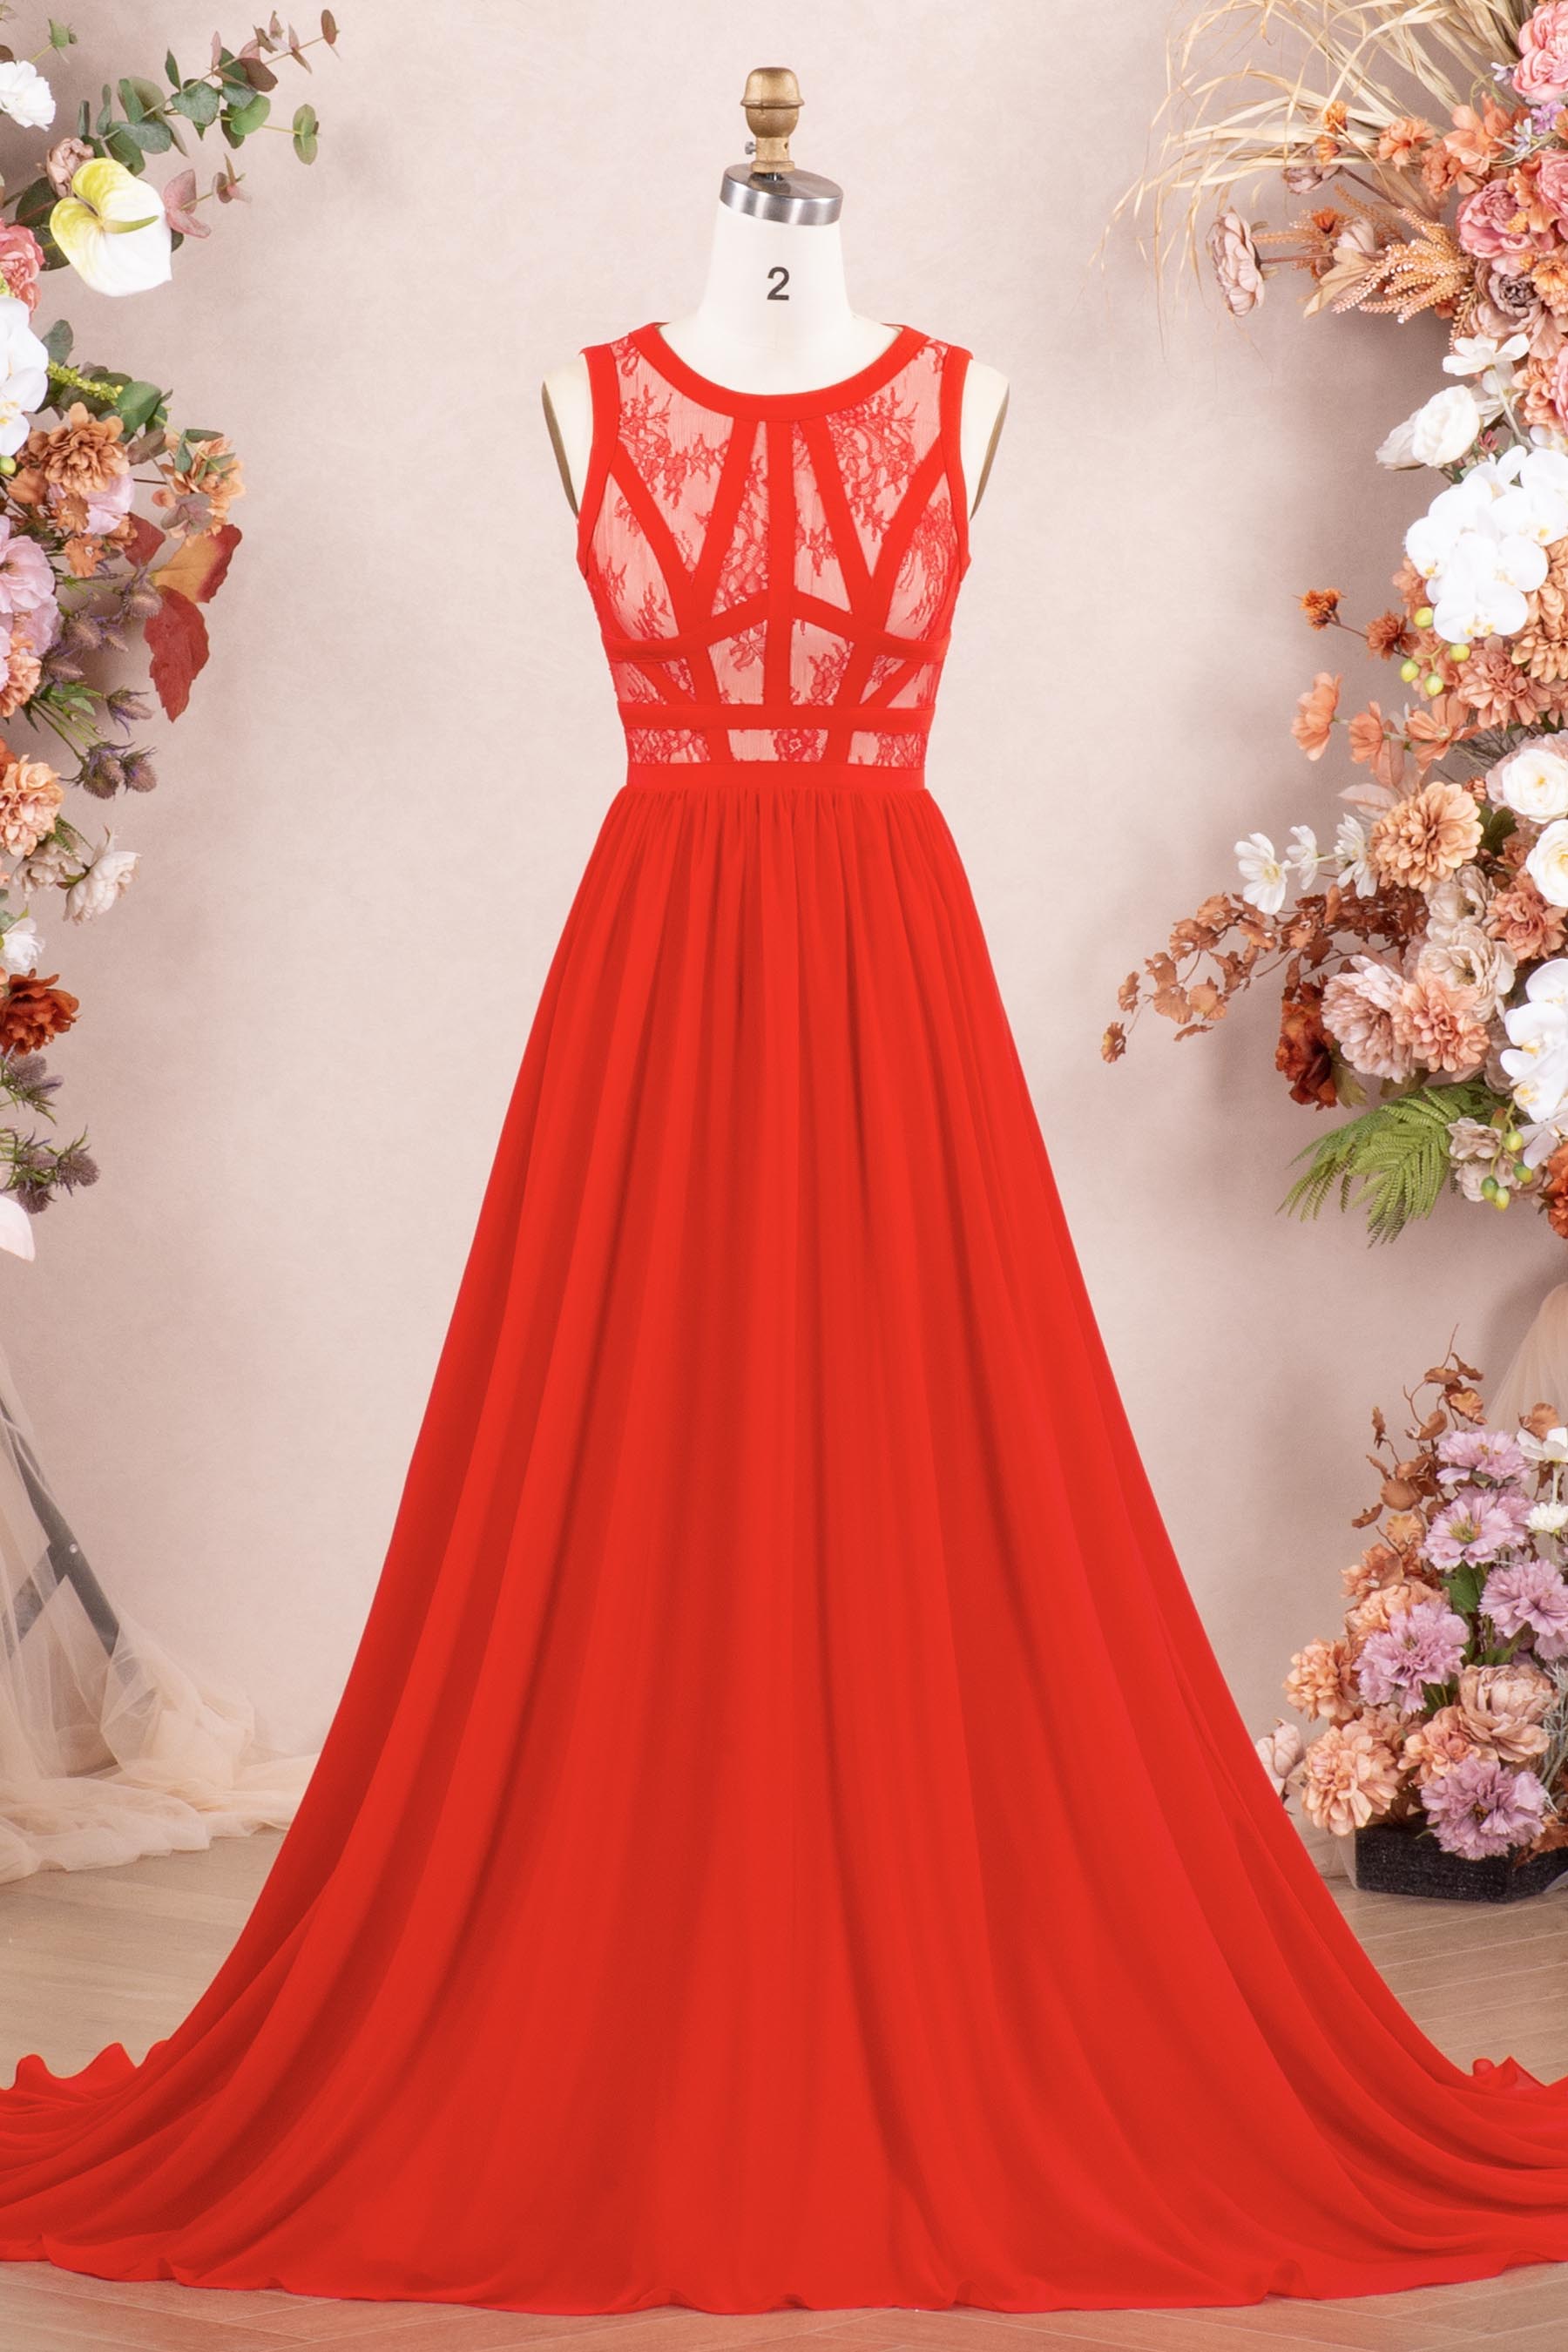 red prom dresses